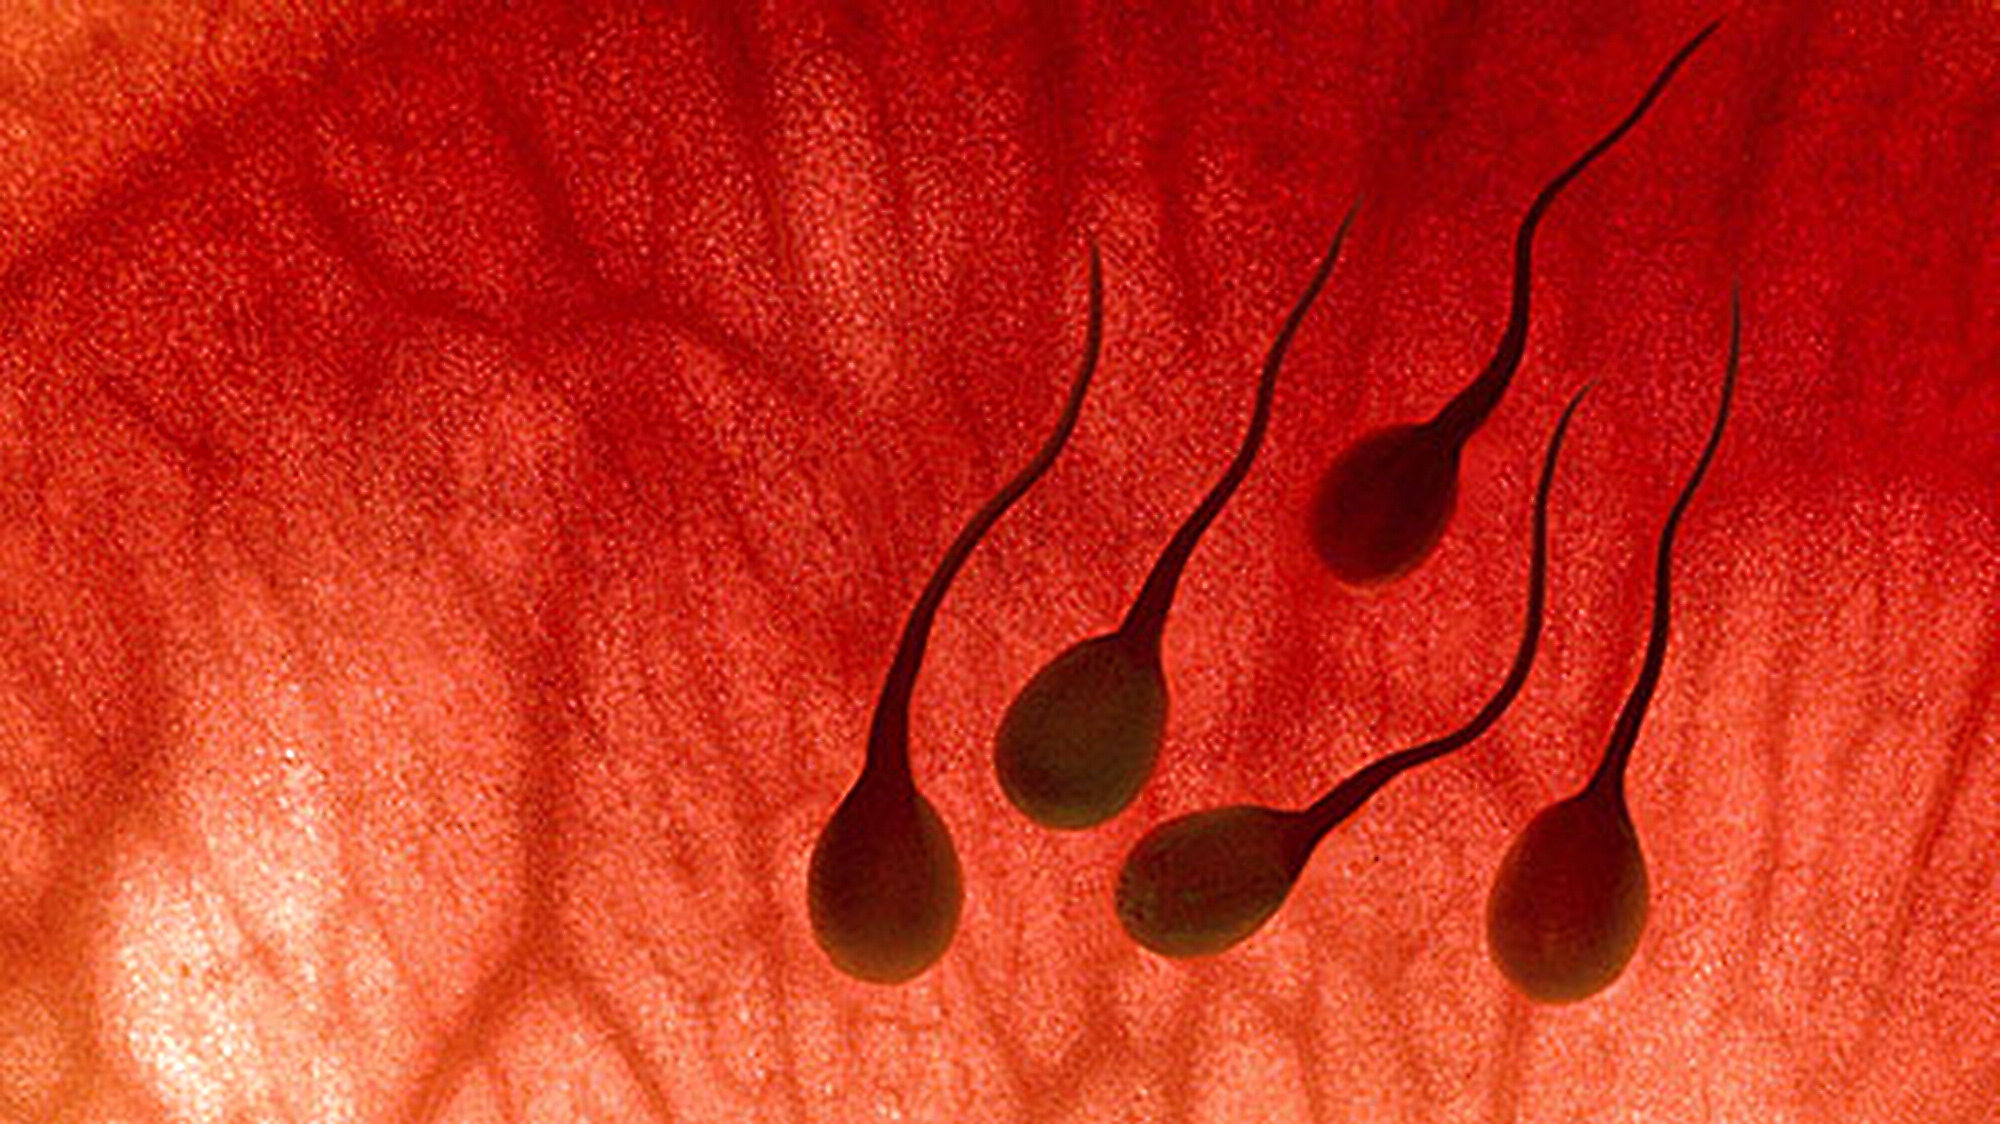 сперма во влагалище у детей фото 107